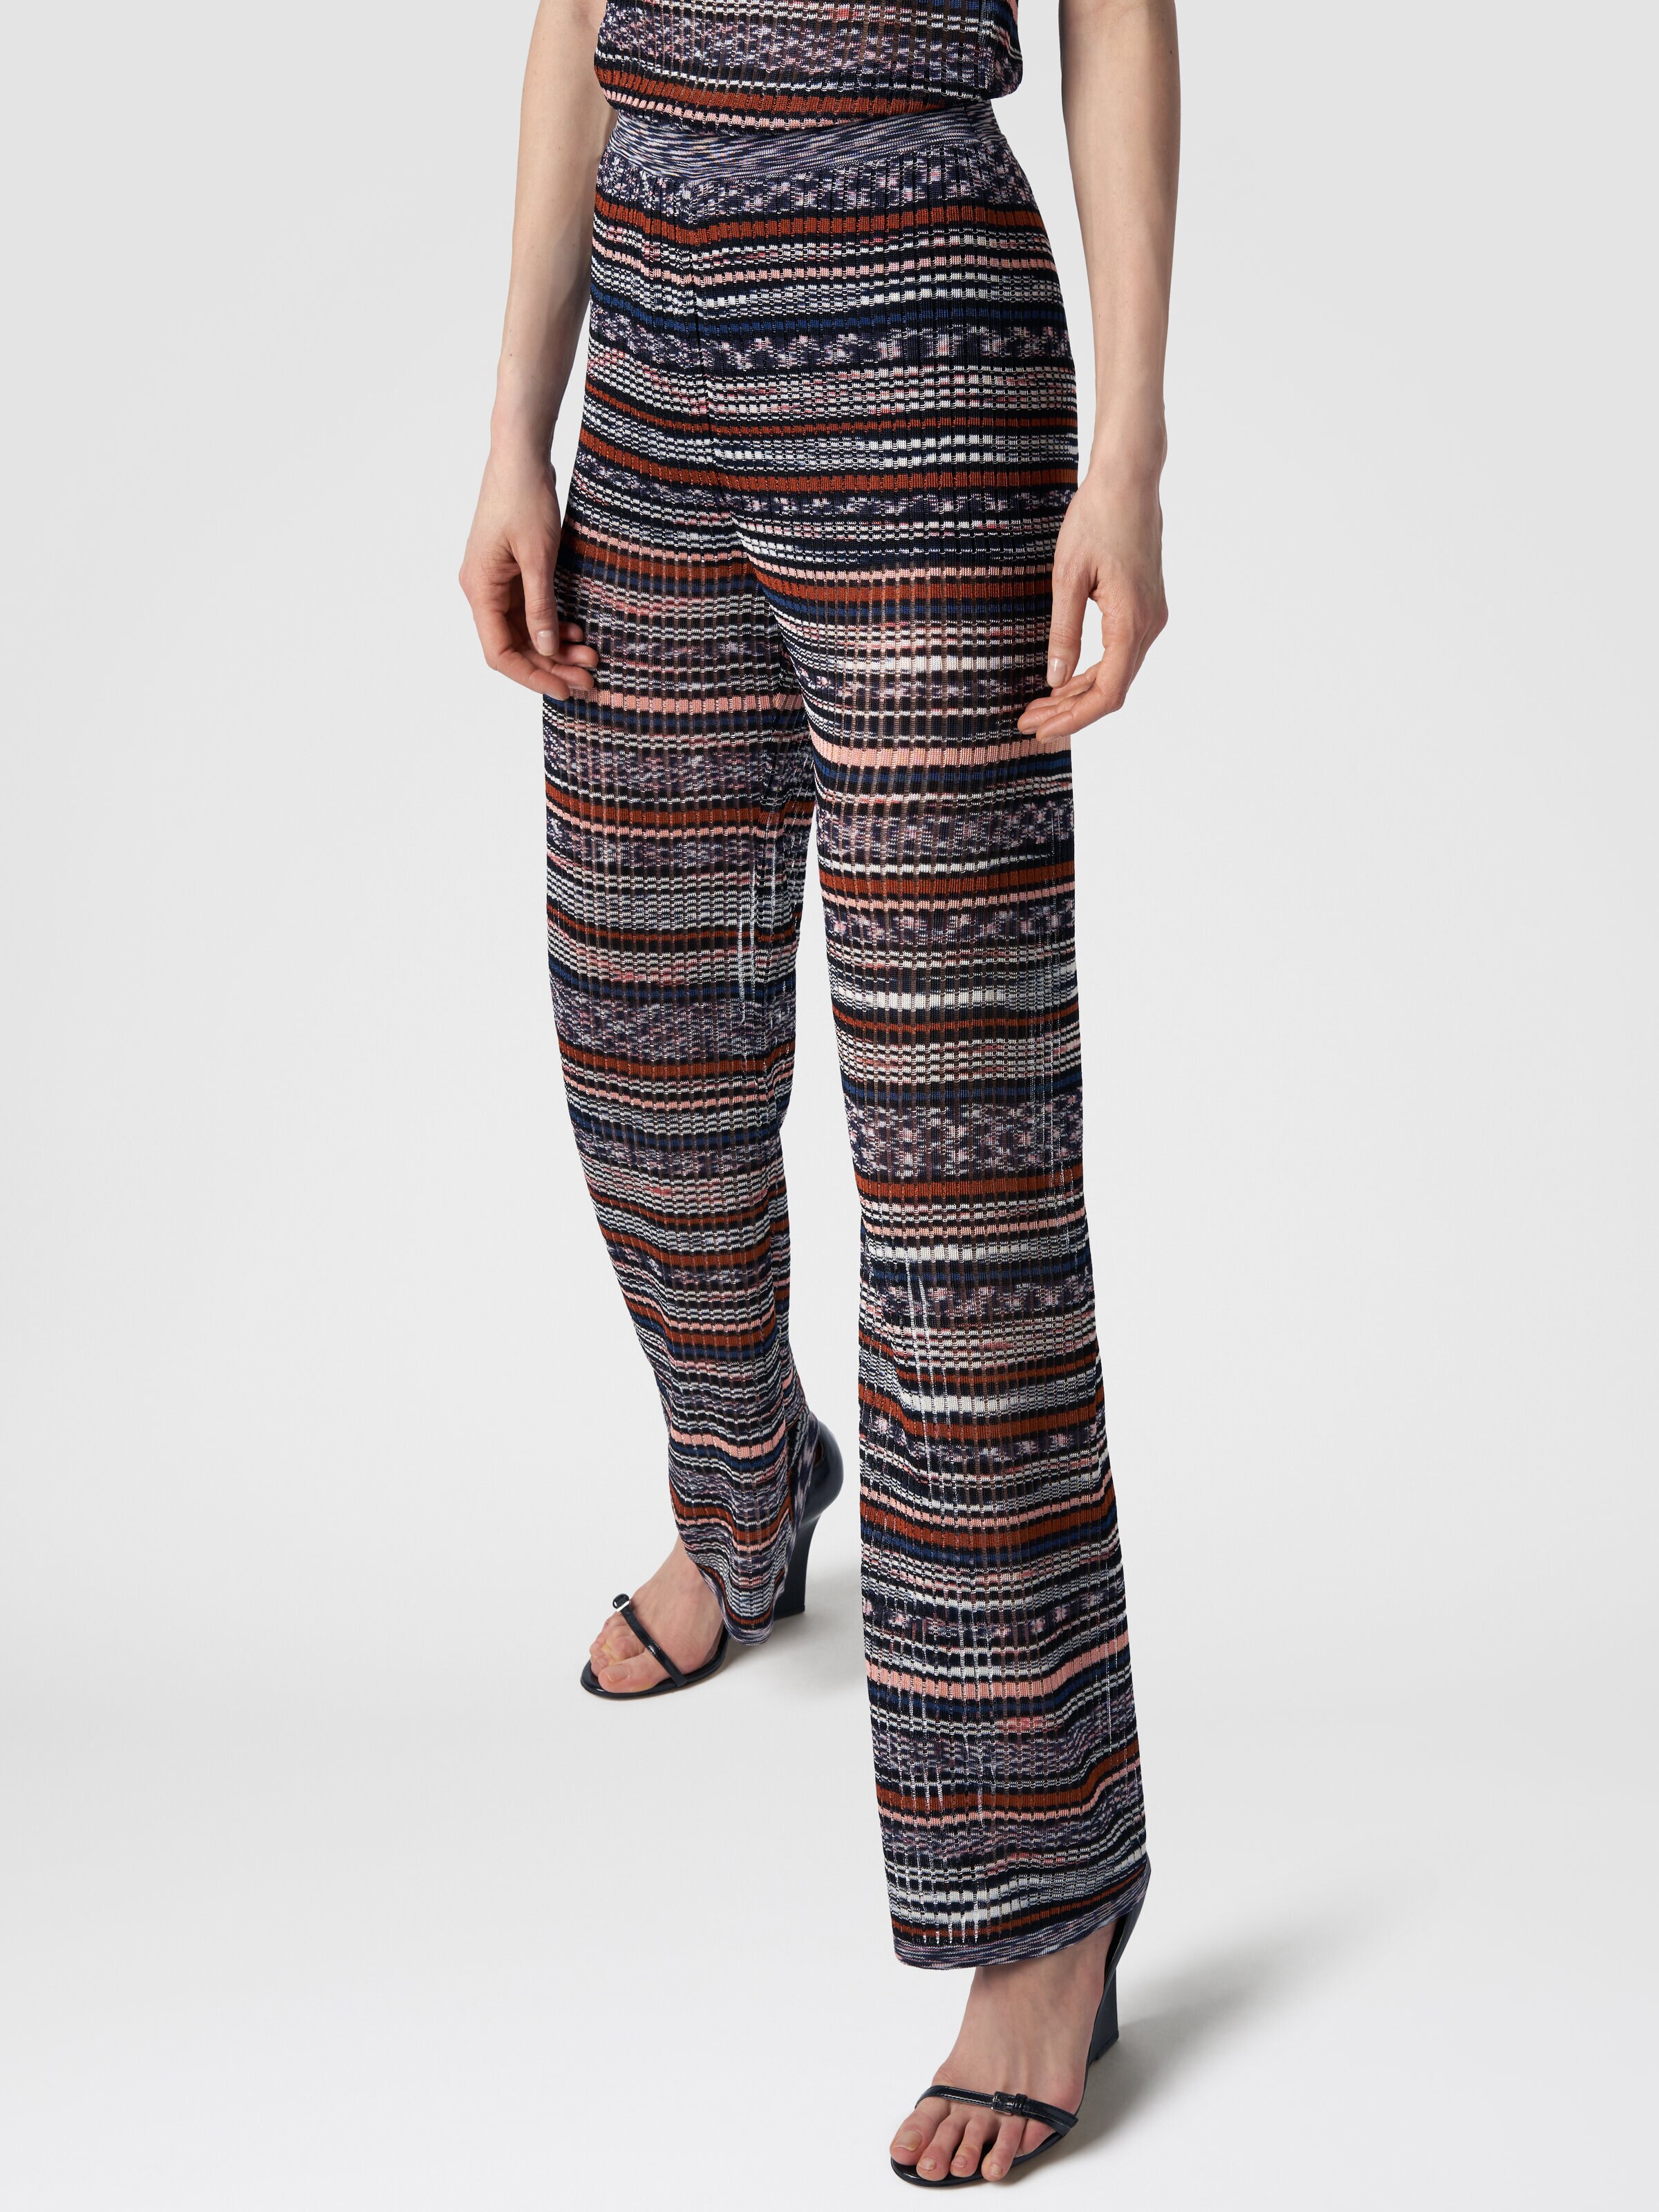 Ribbed trousers in slub viscose knit, Multicoloured  - 3